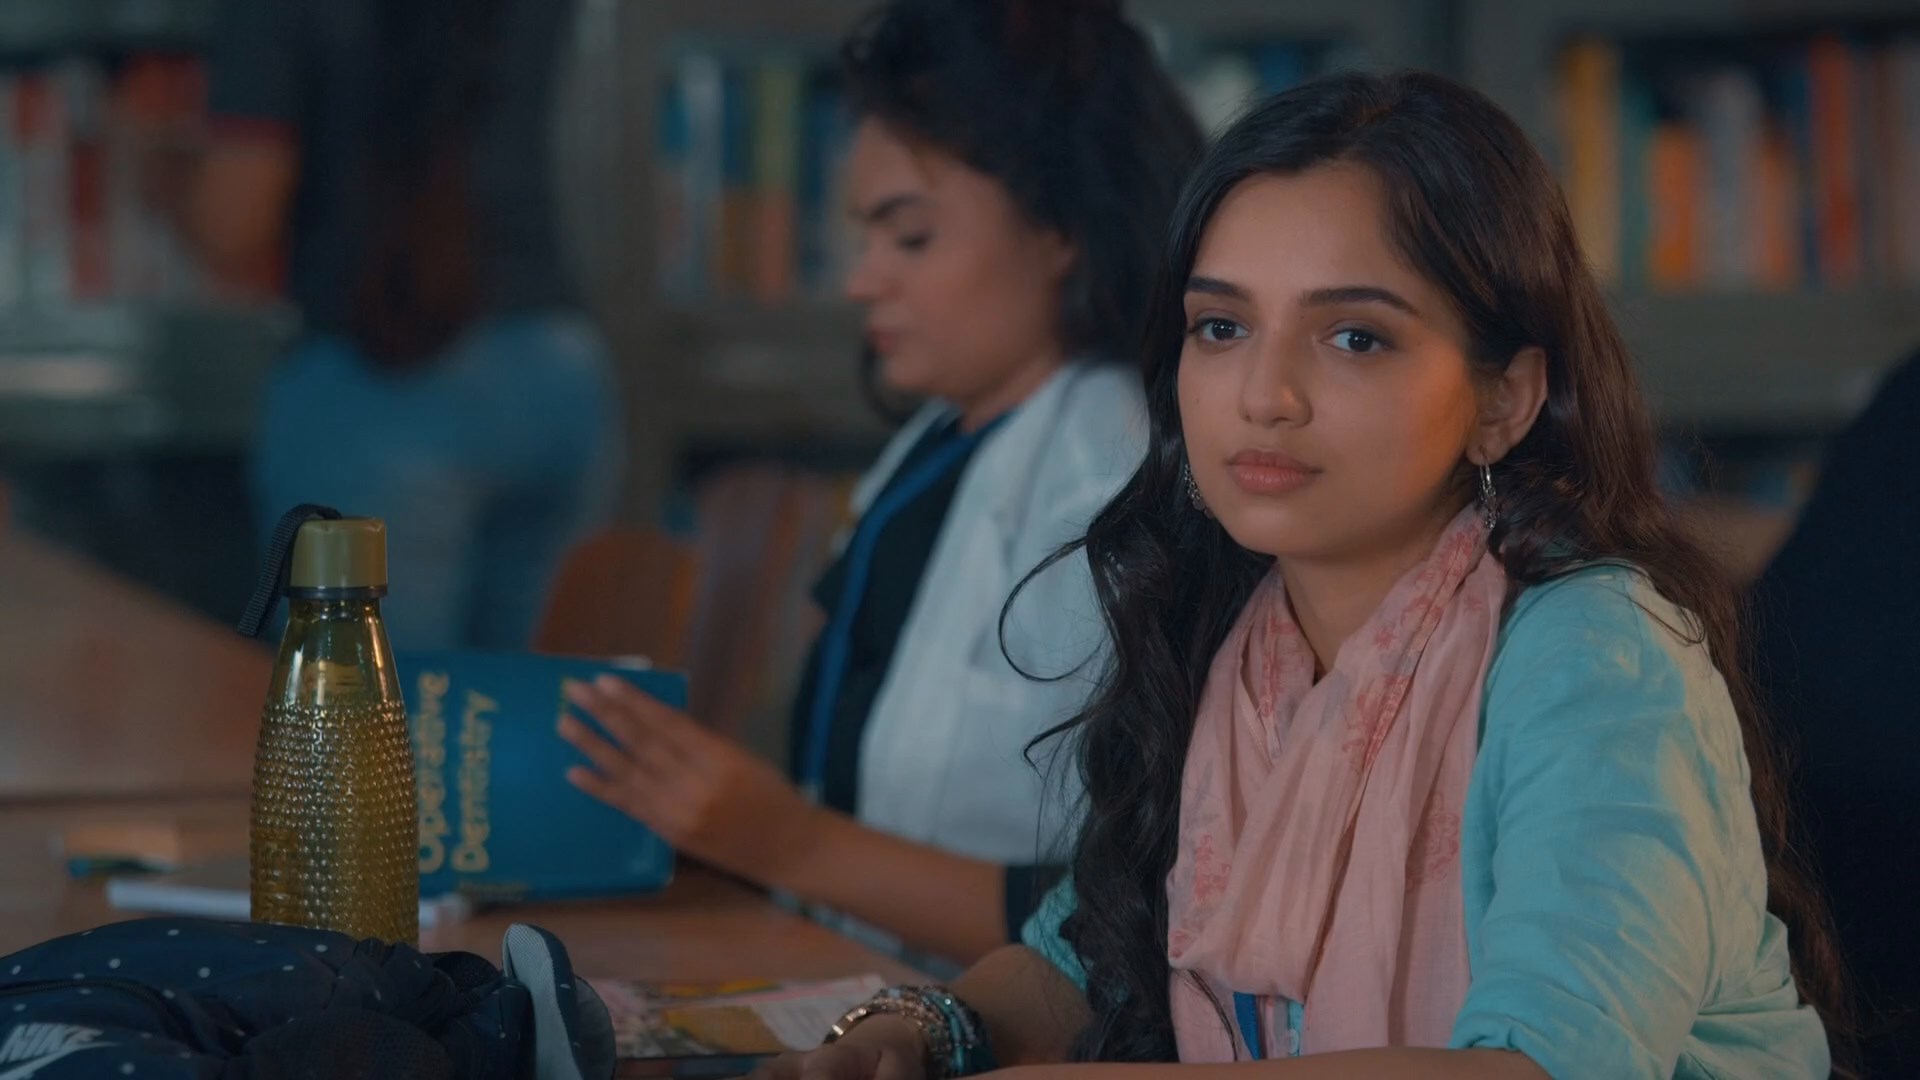 Girls Hostel 2.0 (2021) Hindi Season 2